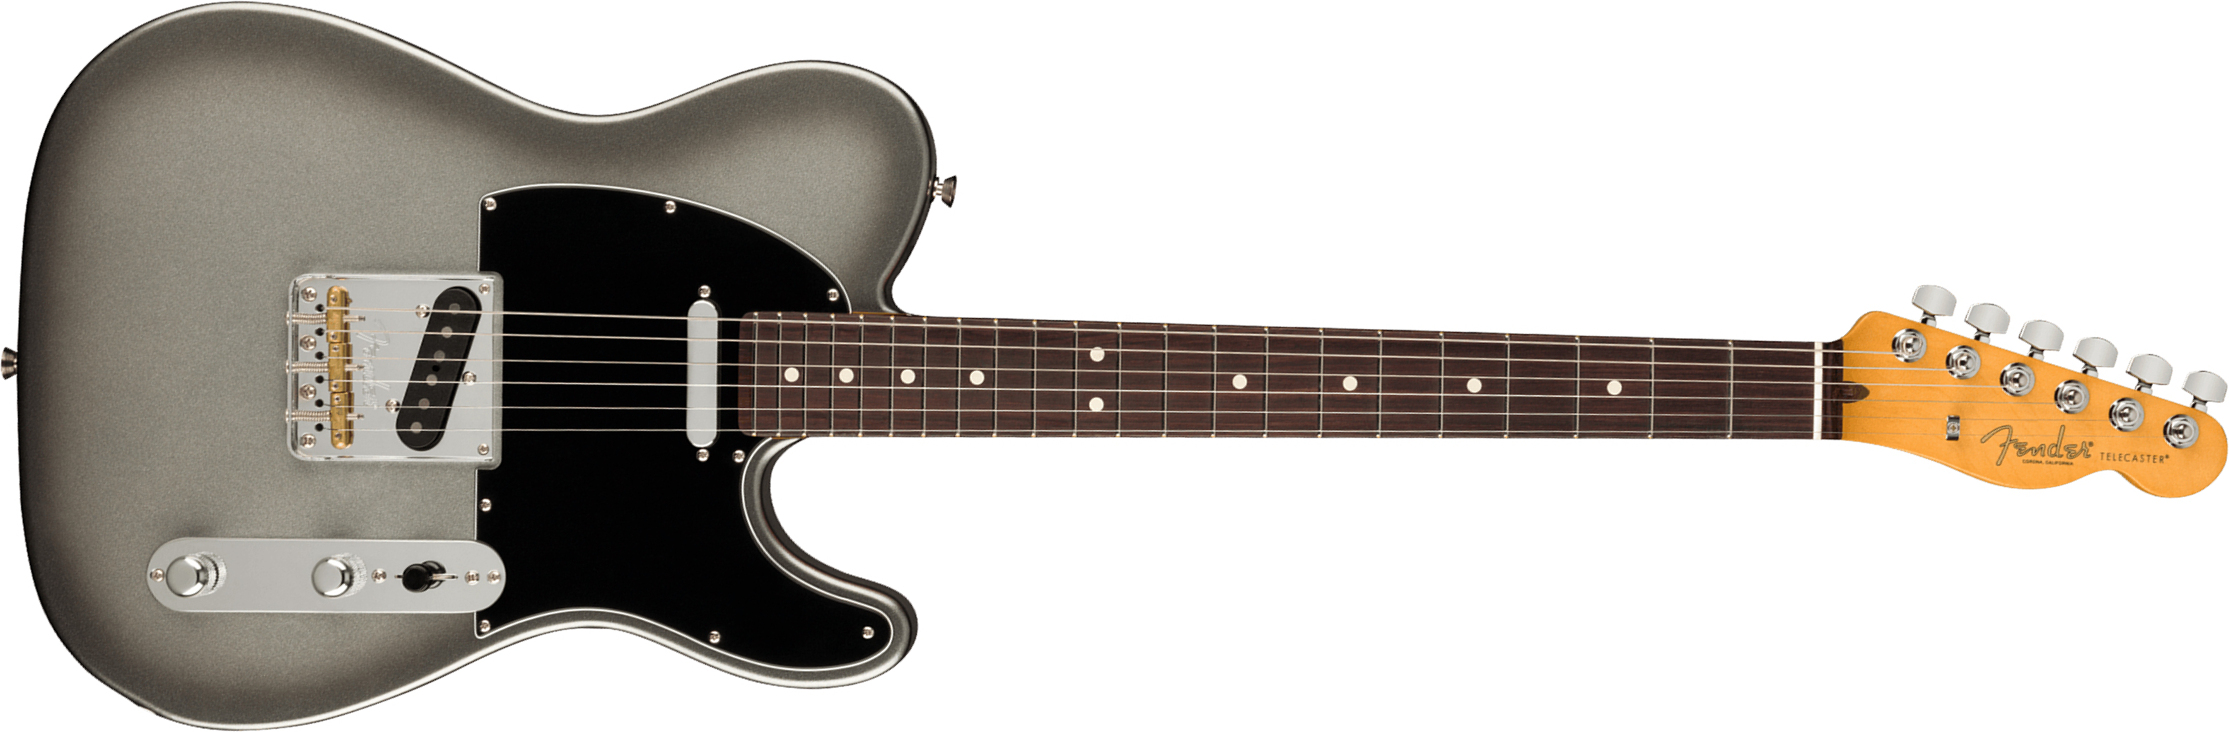 Fender Tele American Professional Ii Usa Rw - Mercury - Tel shape electric guitar - Main picture